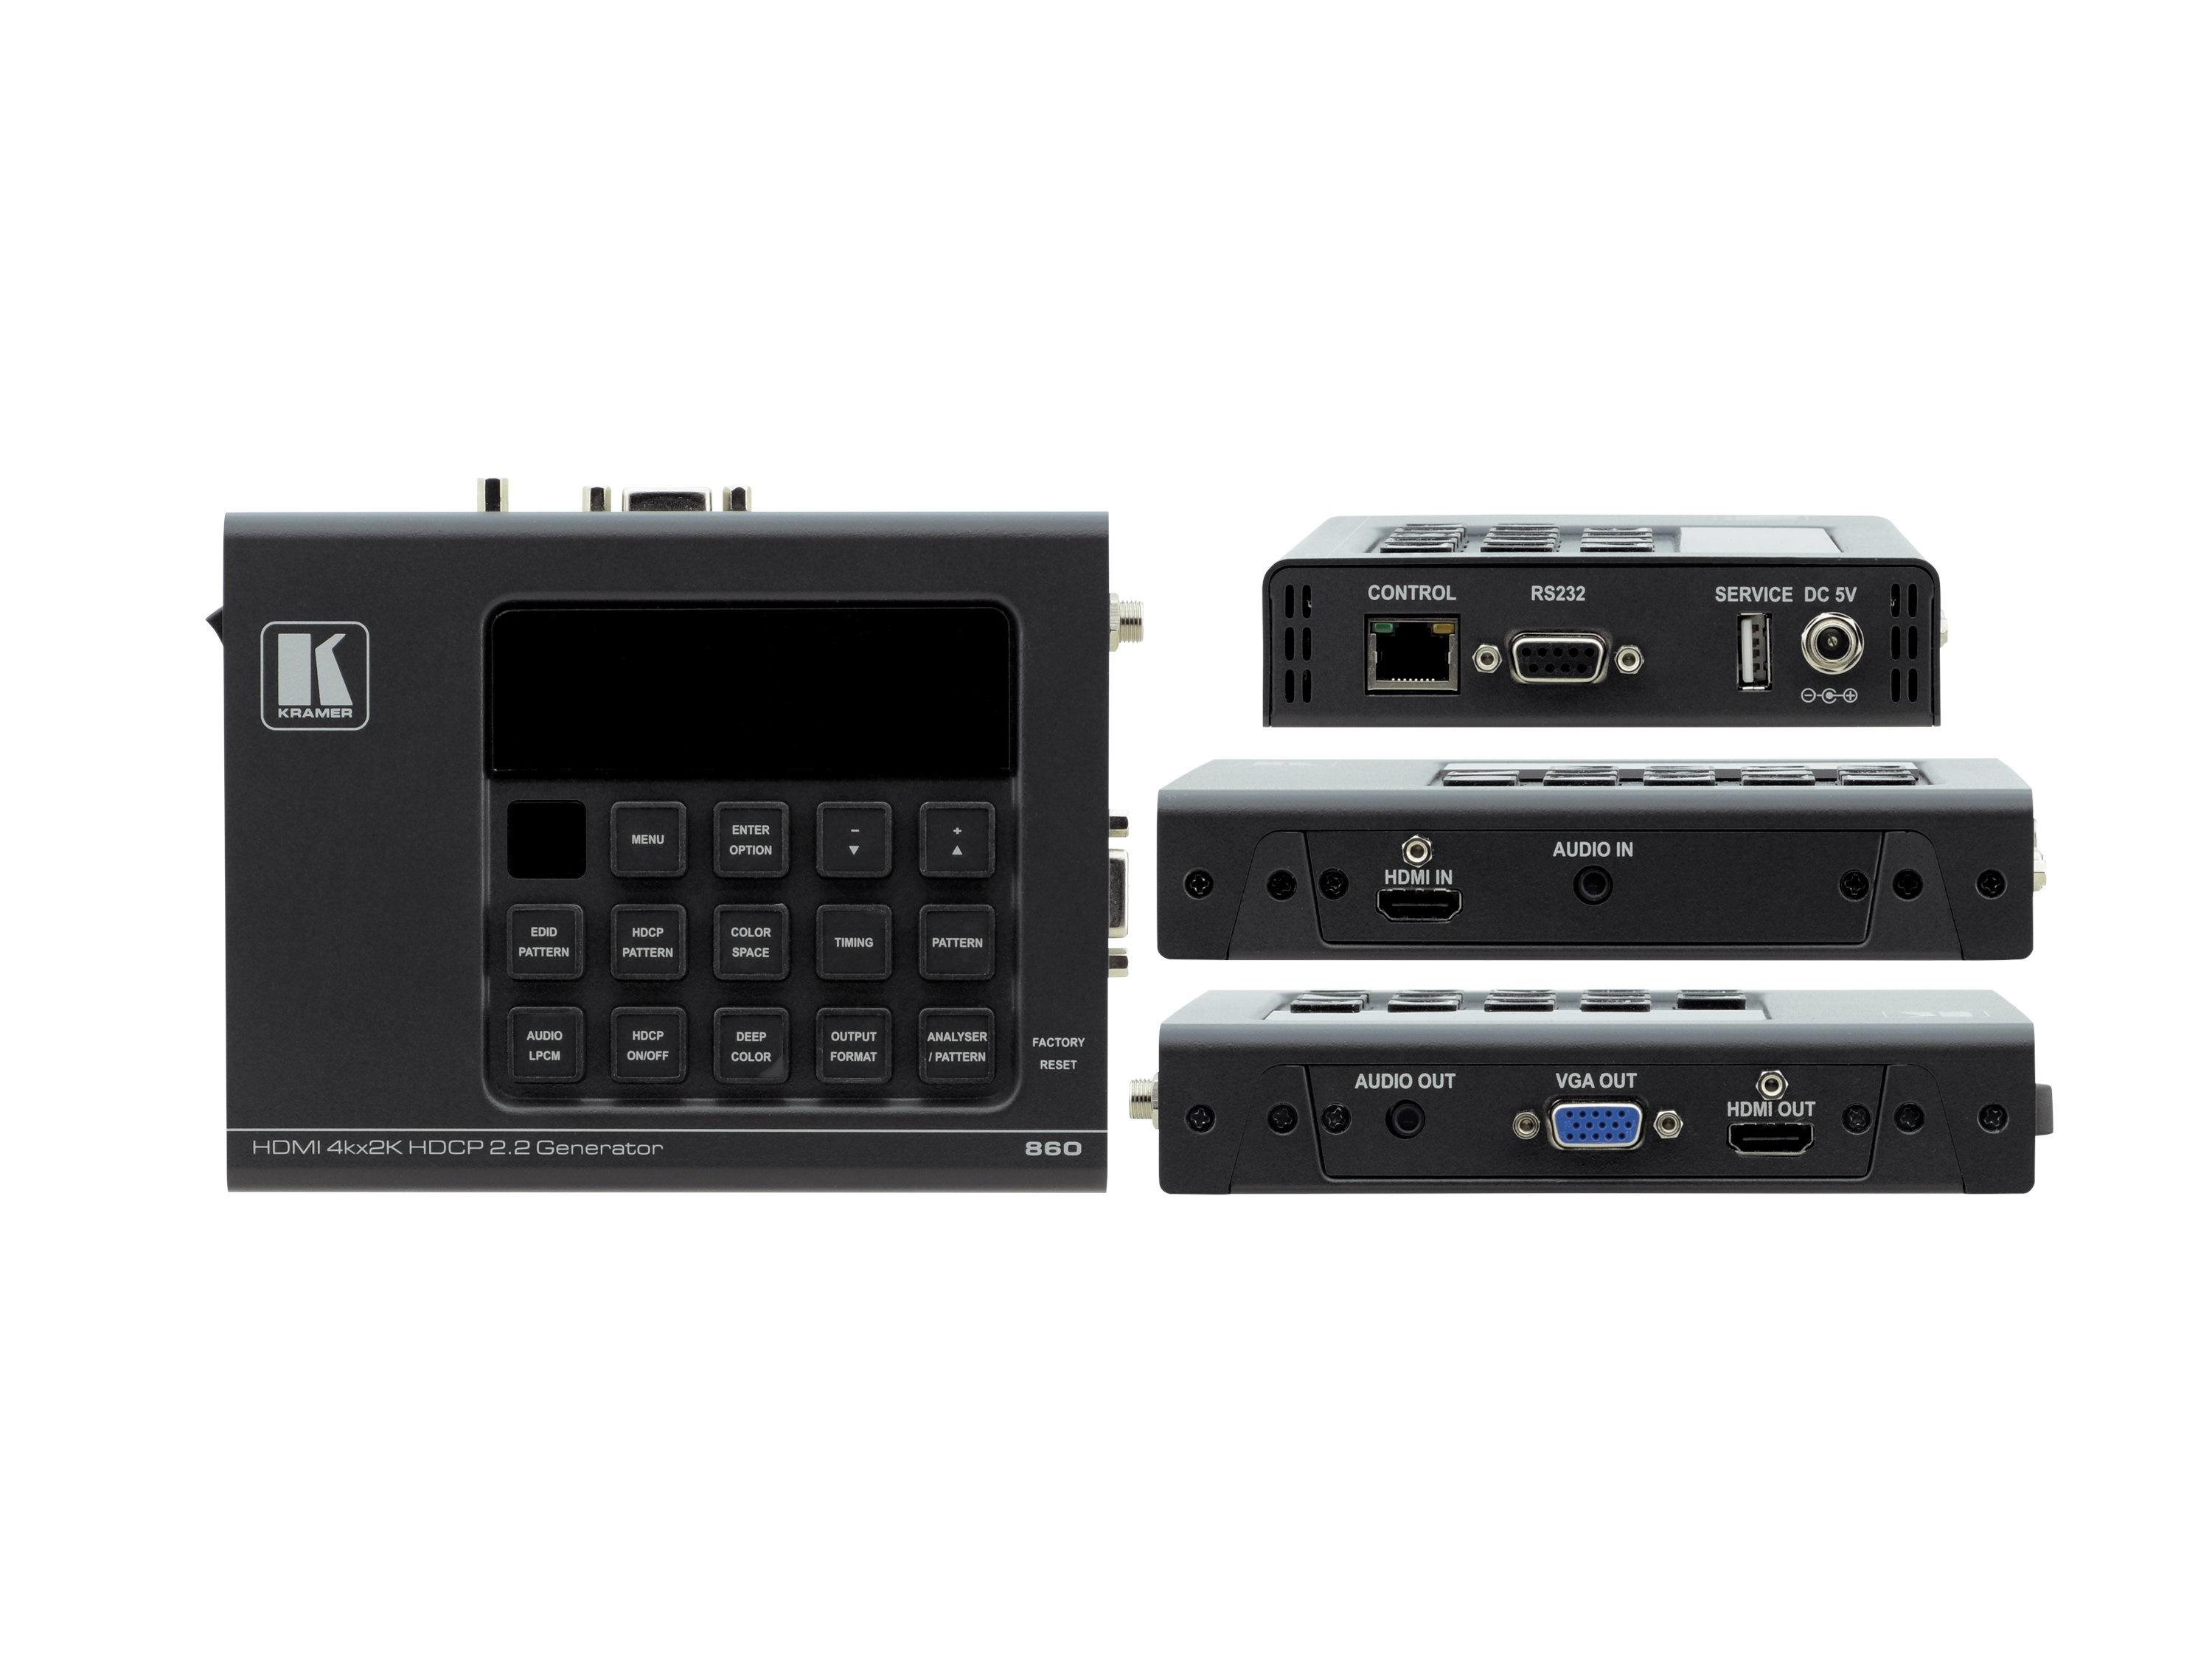 Kramer 860 4K/60 4x4x4 HDCP 2.2 HDMI 2.0 18G Signal Generator/Analyzer